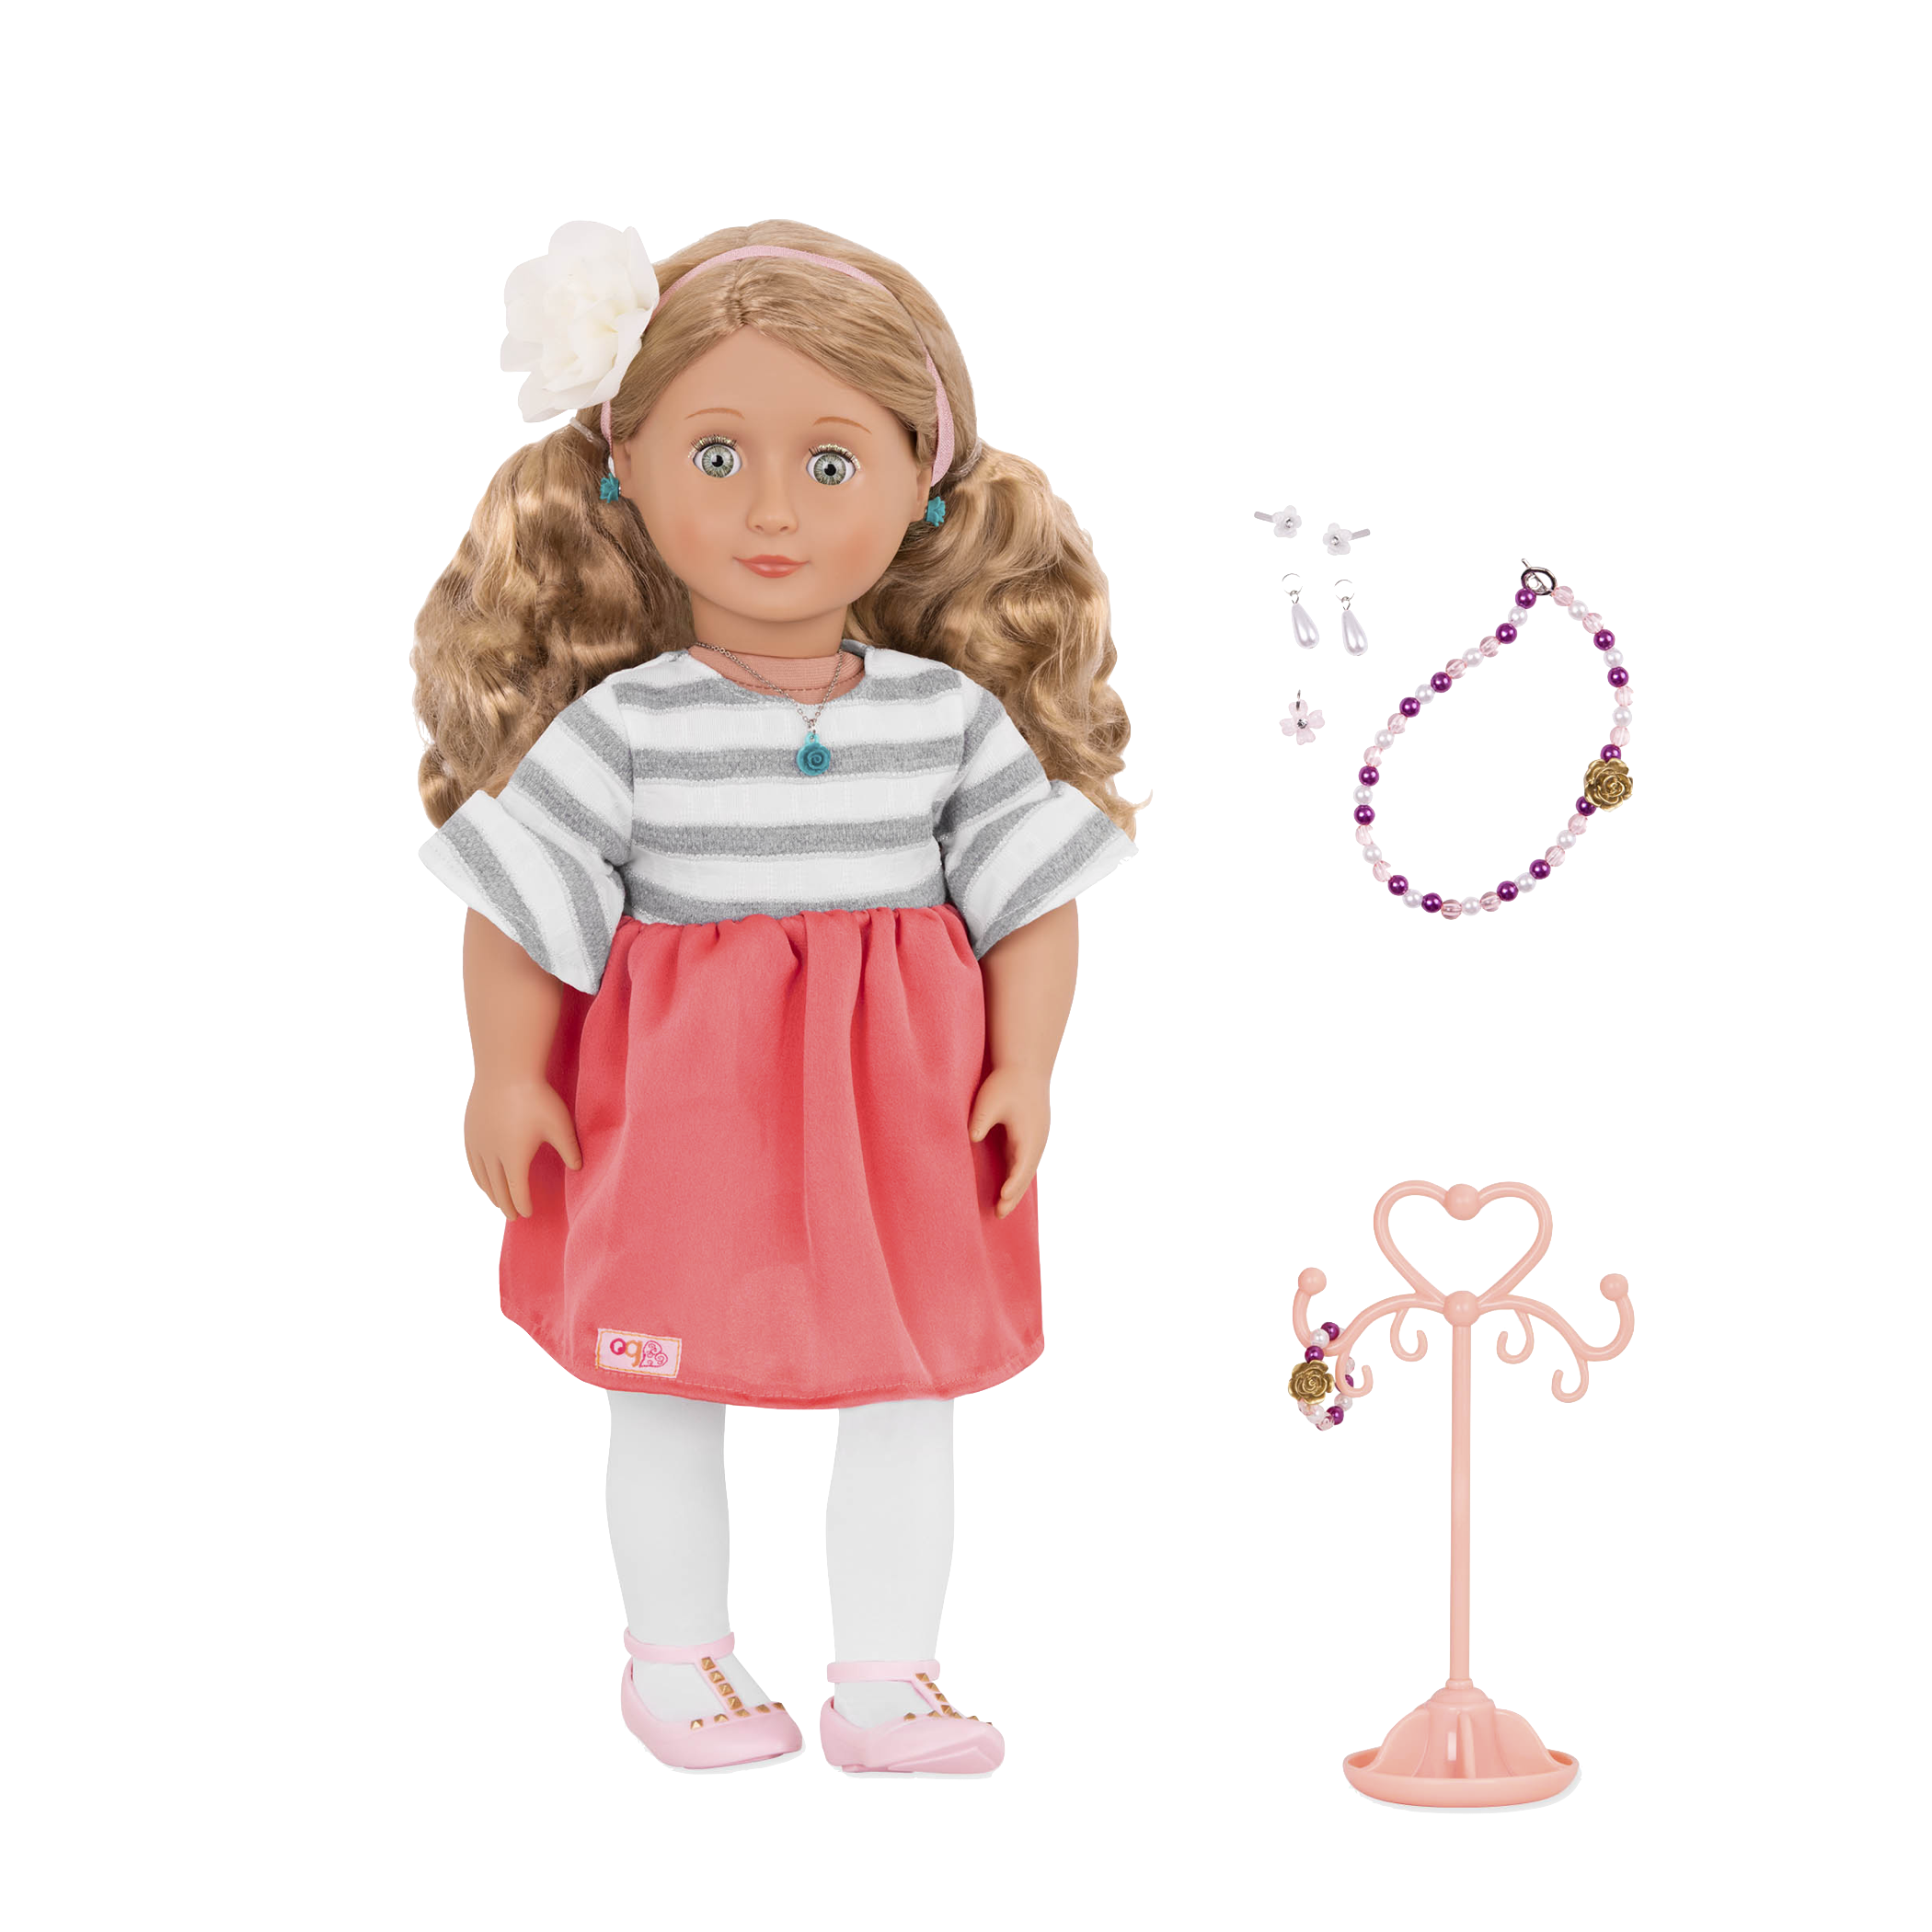 Aileen 18-inch Jewelry Doll with Earrings